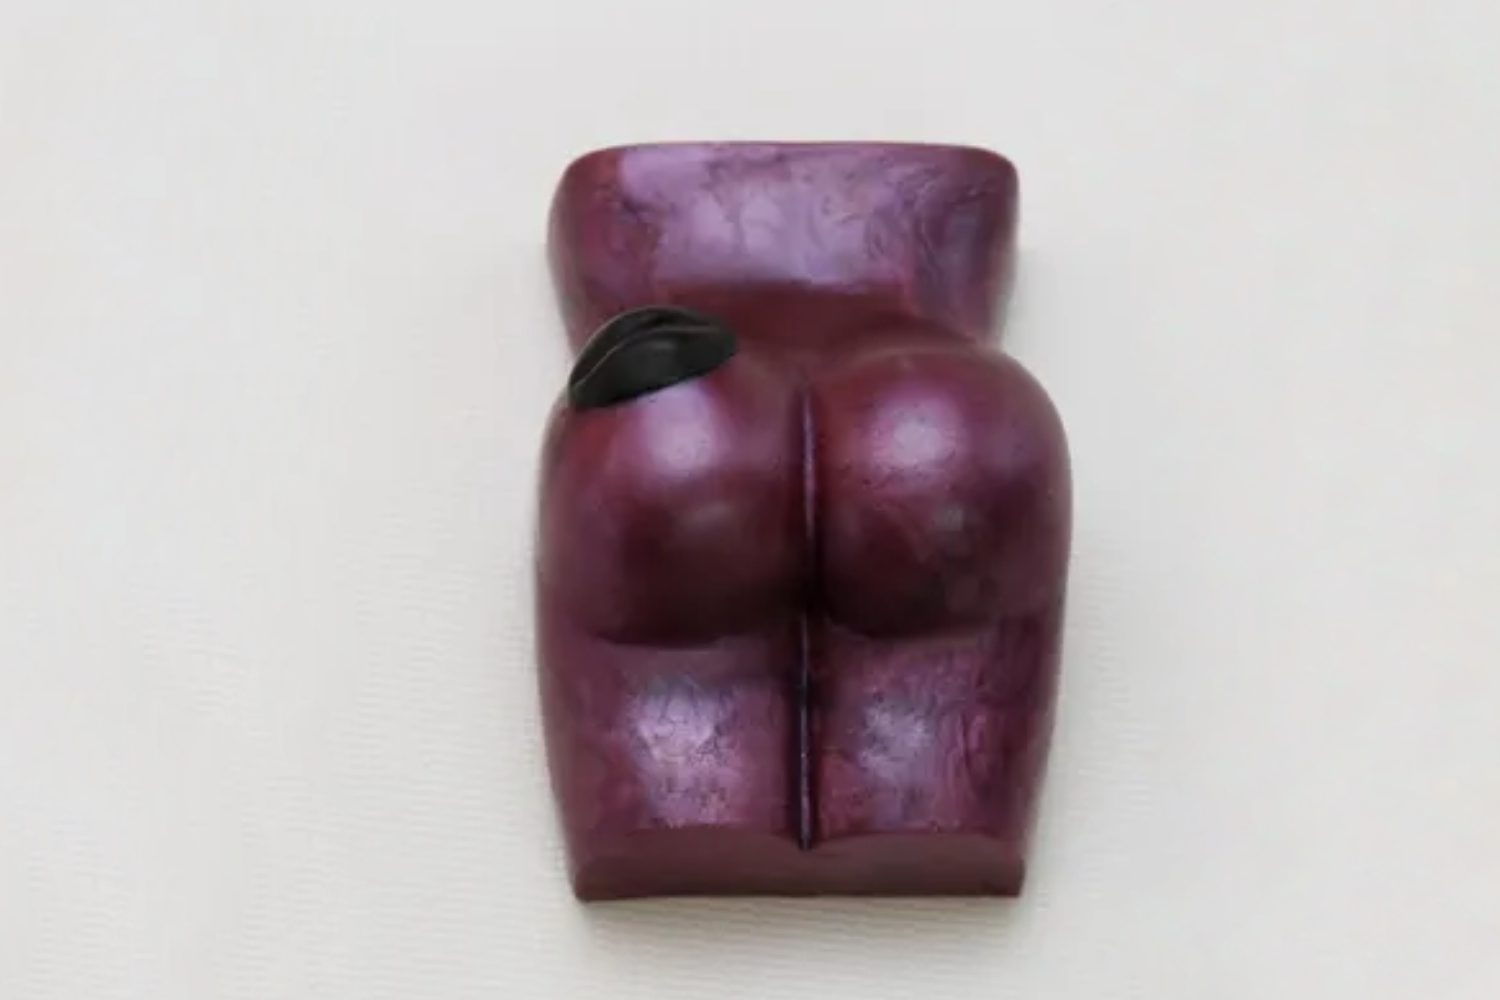 A purple sculpture of a woman 's buttocks.